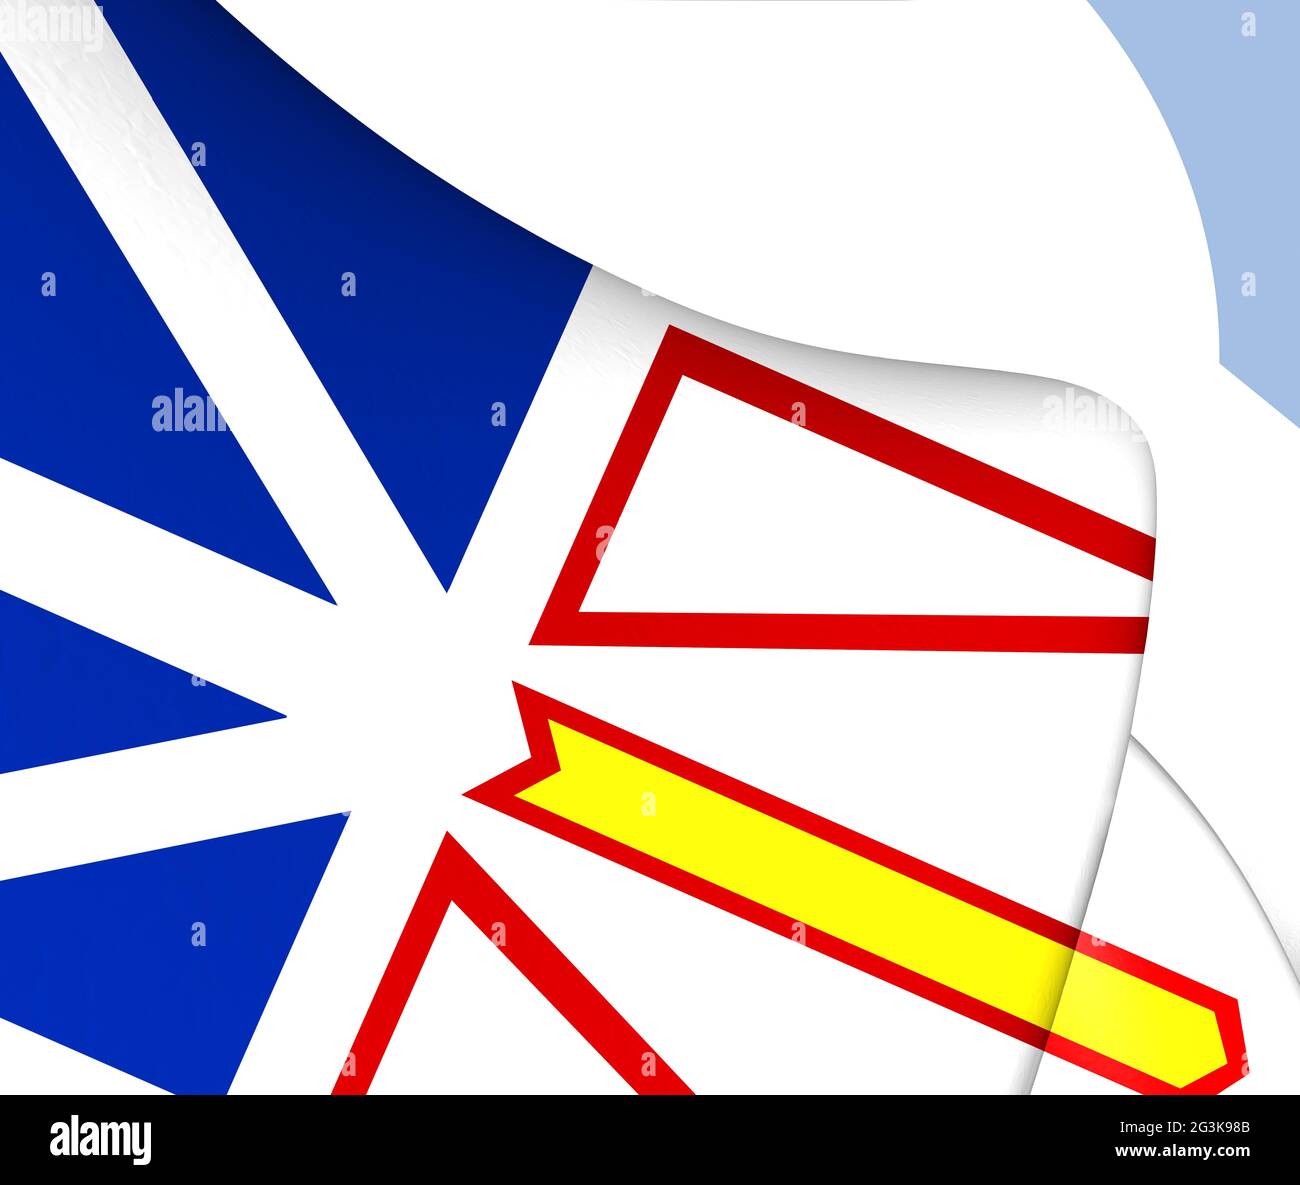 newfoundland flag clipart watermark